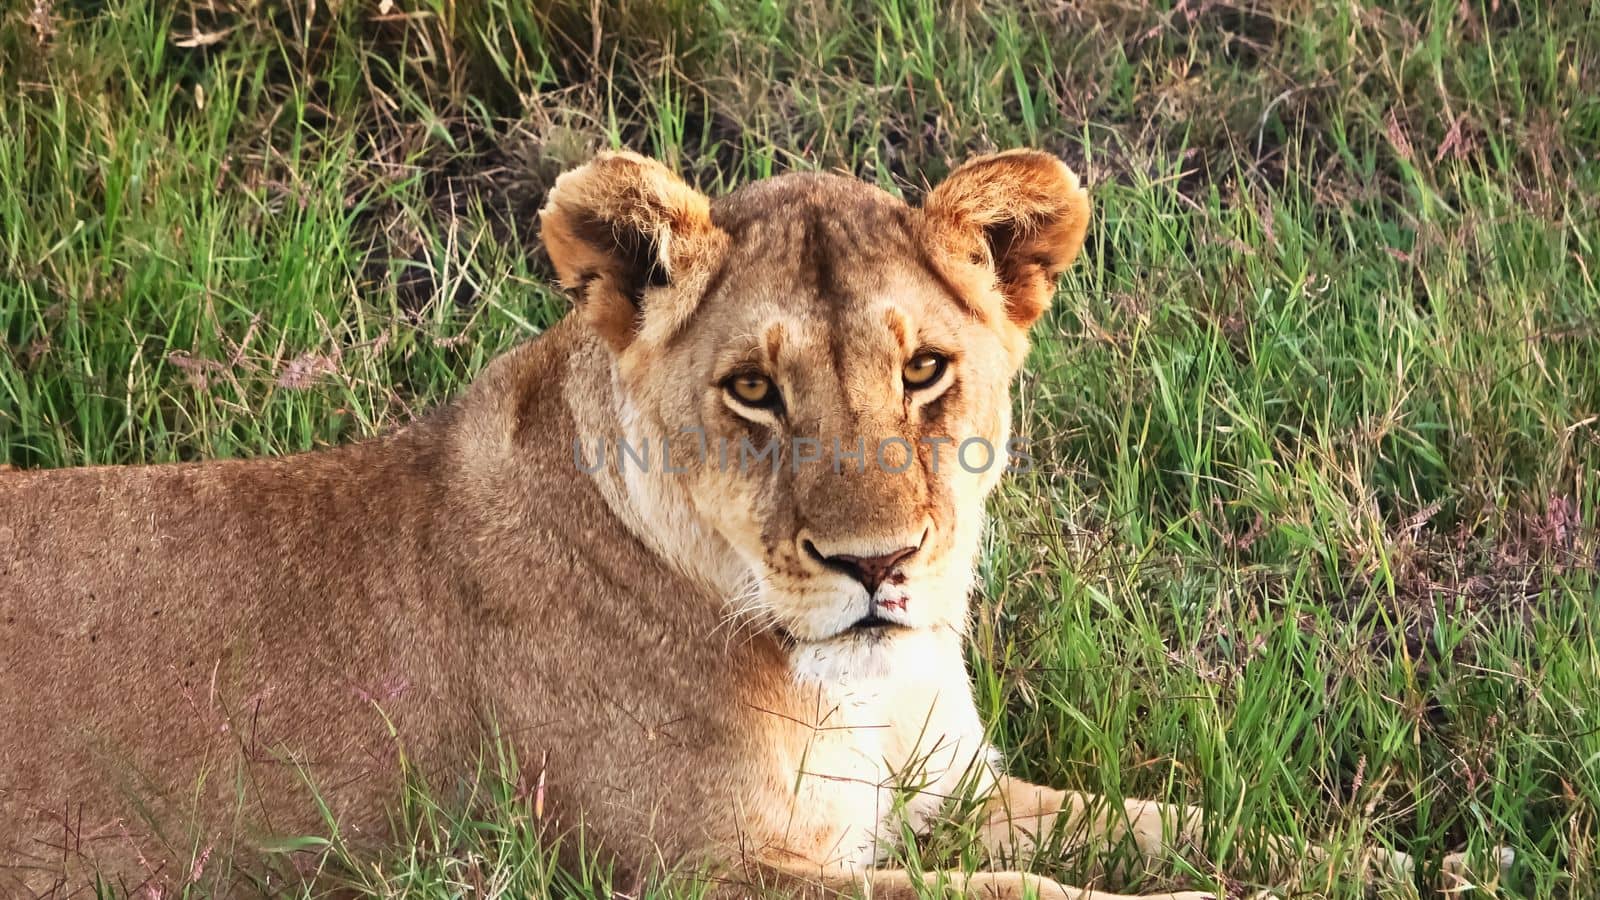 Impressive wild lions in the wilds of Africa in Masai Mara